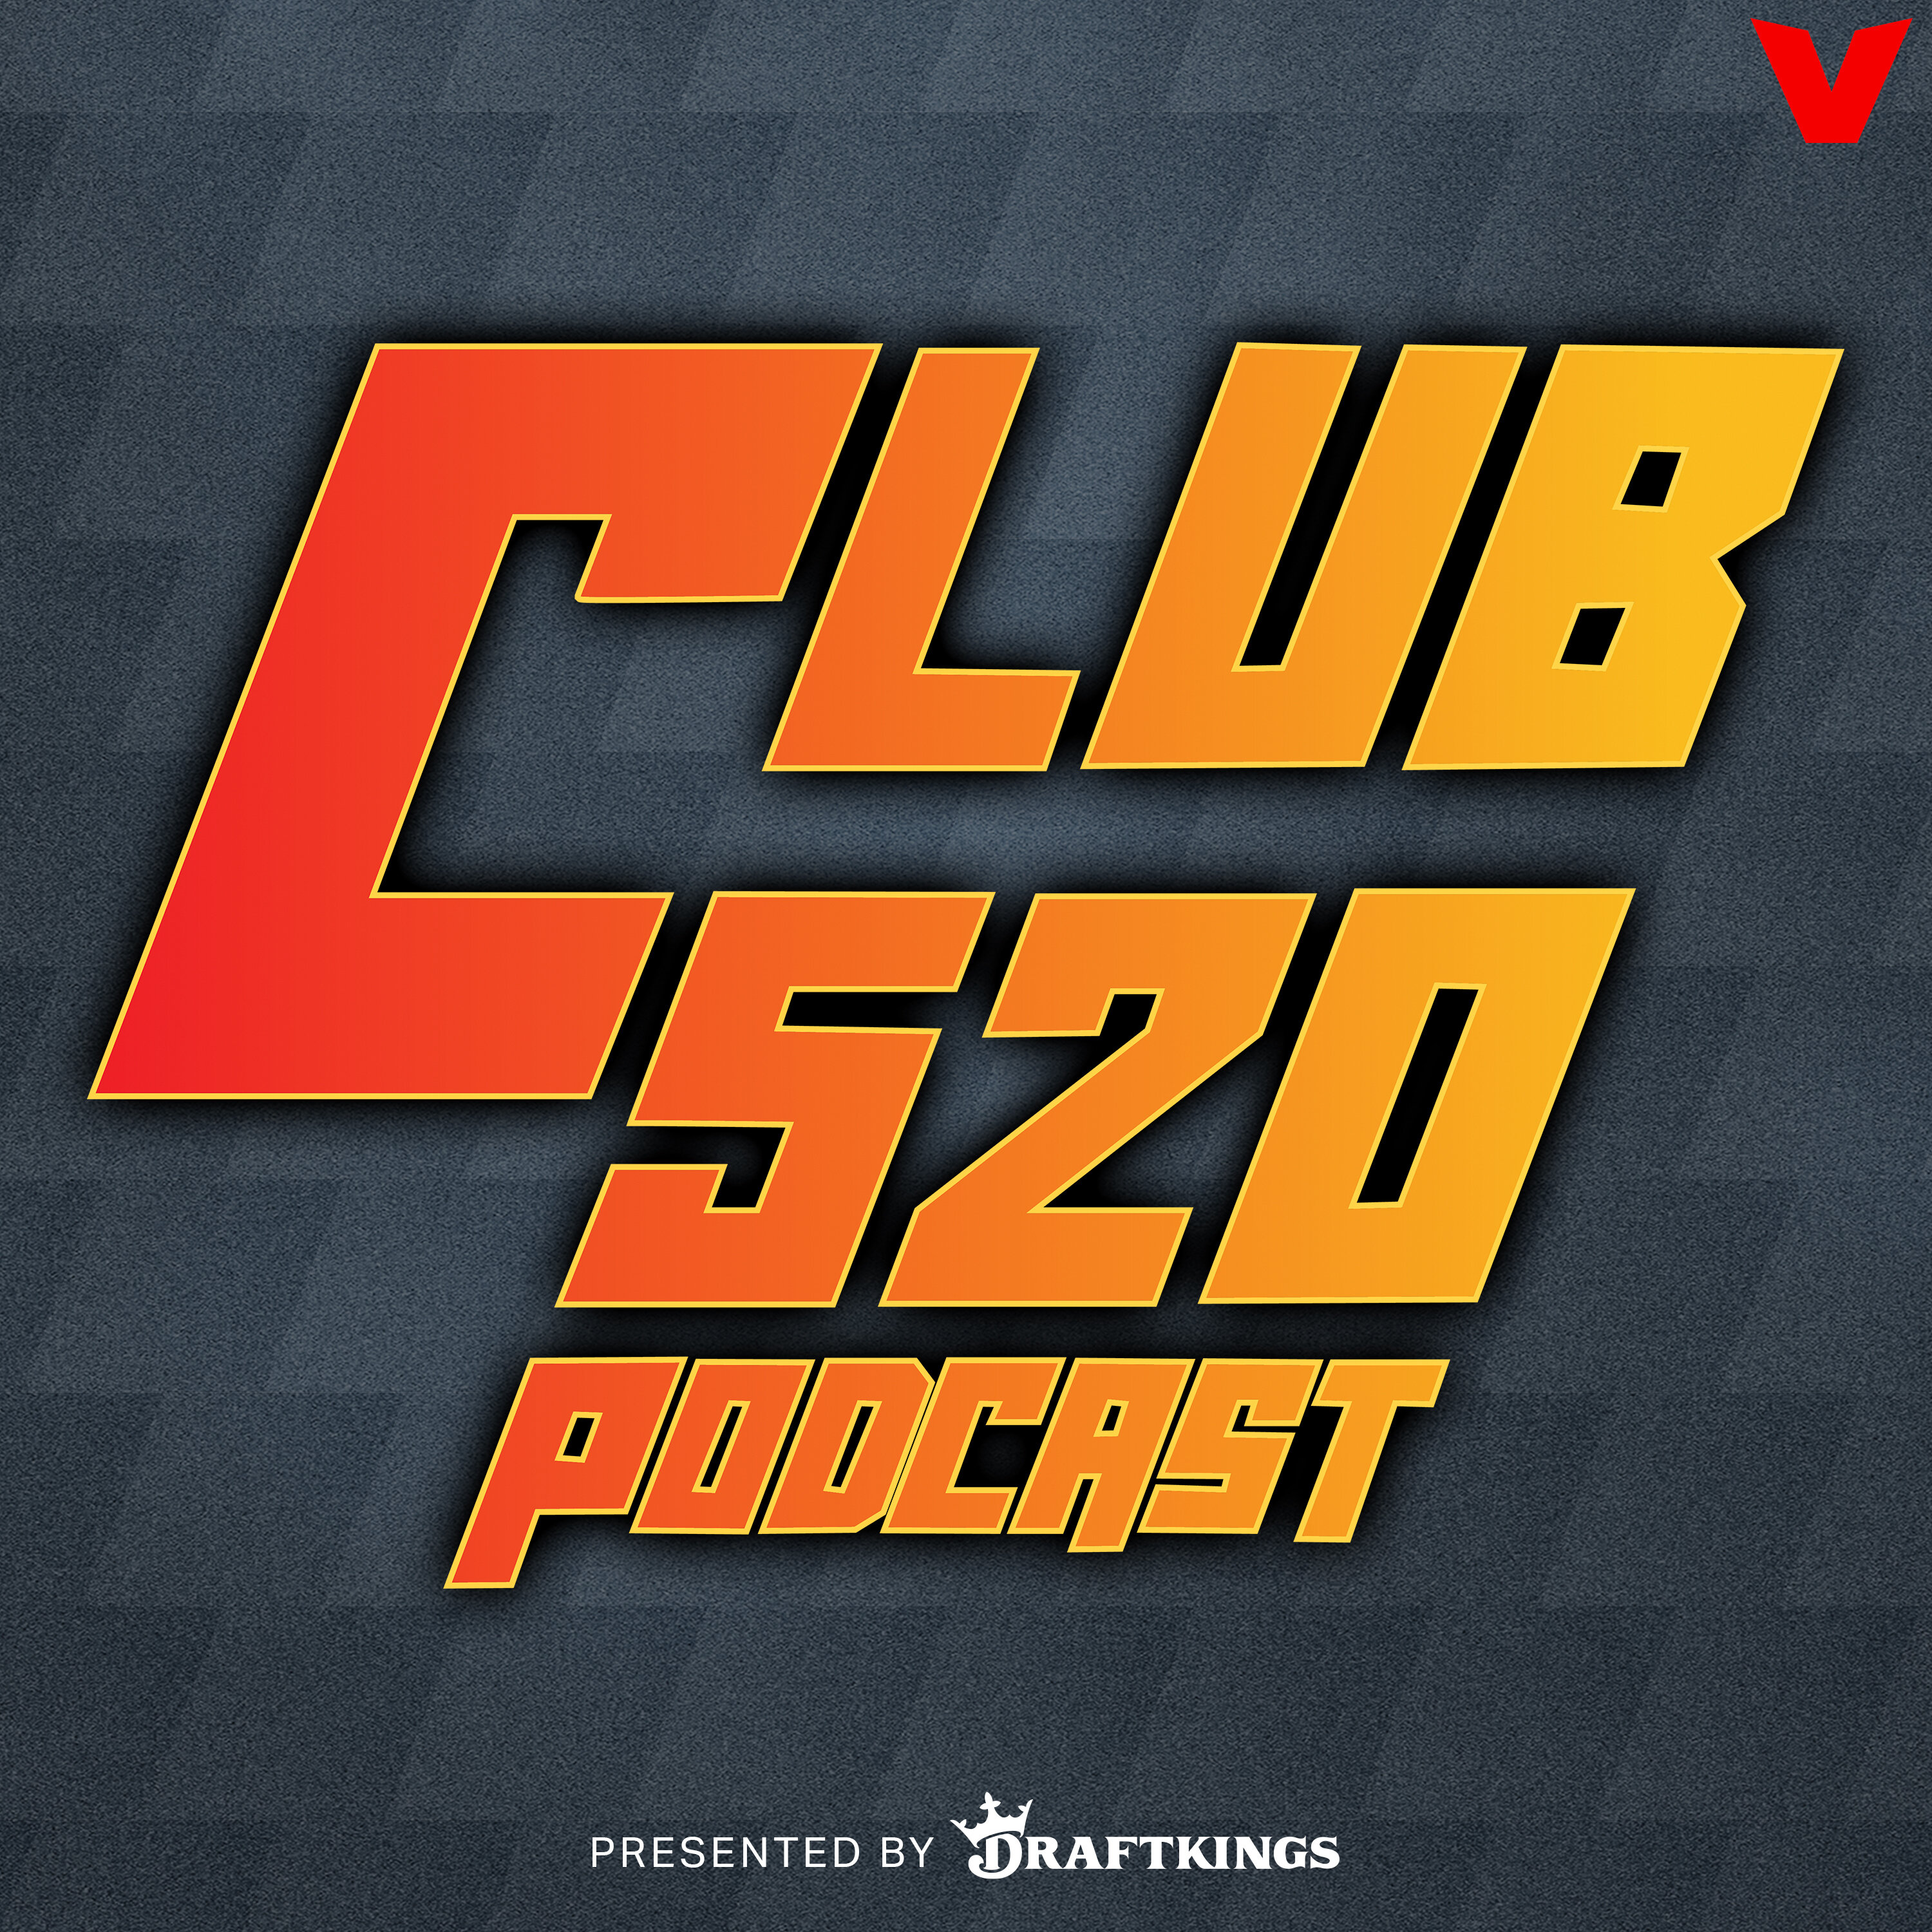 Club 520 - Jeff Teague praises Brandon Jennings, Katt Williams interview, Embiid vs. Jokic